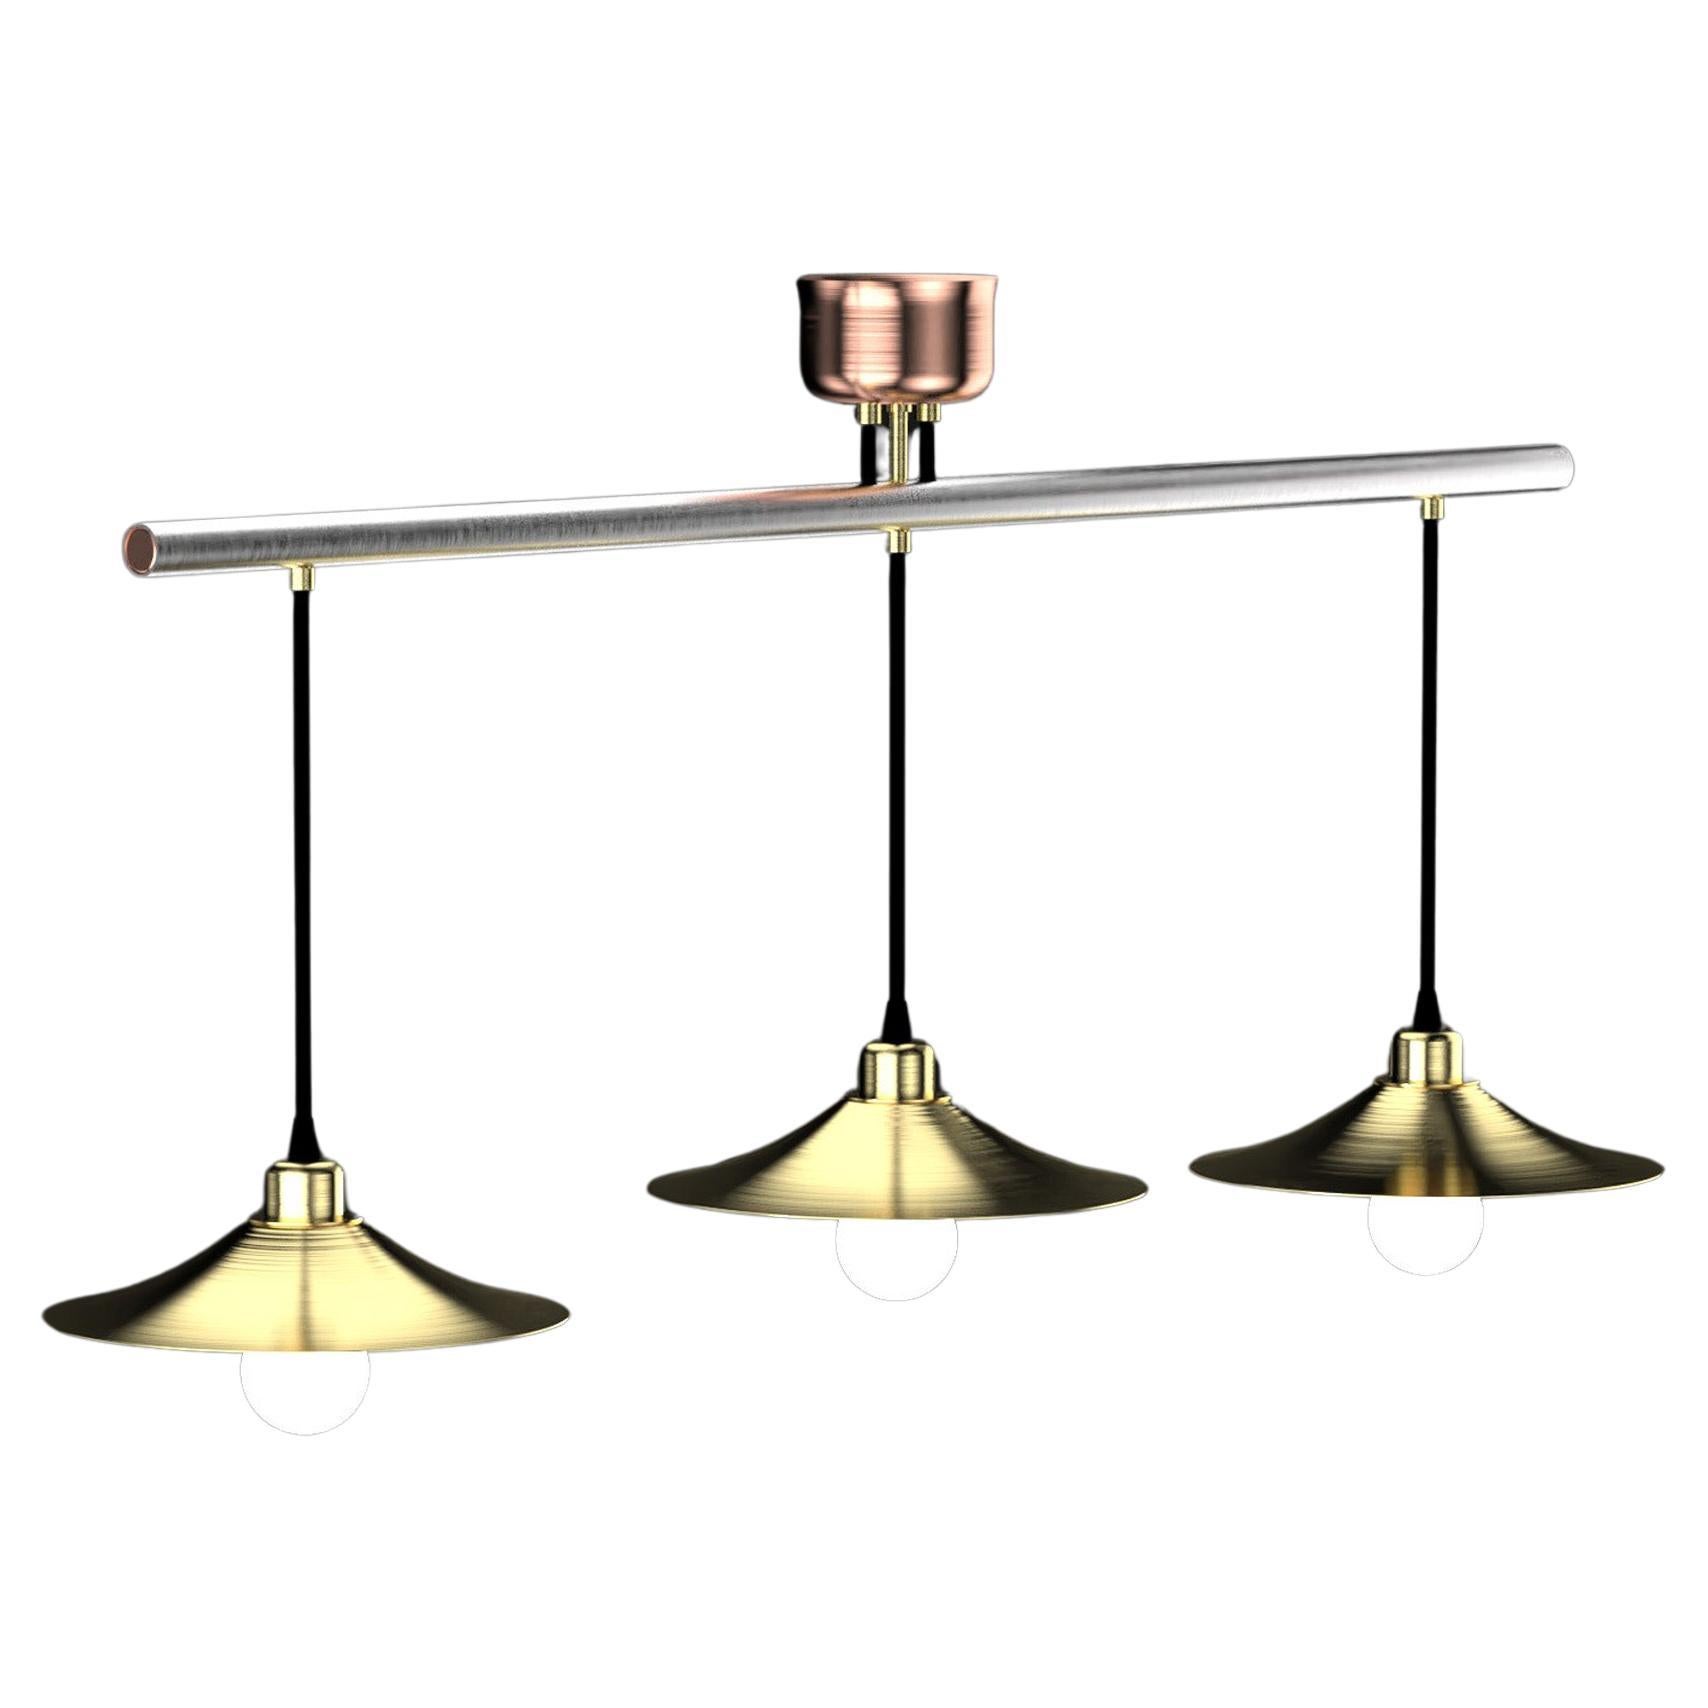 Edimate Genuine Stainless Steel/Brass Ceiling Light